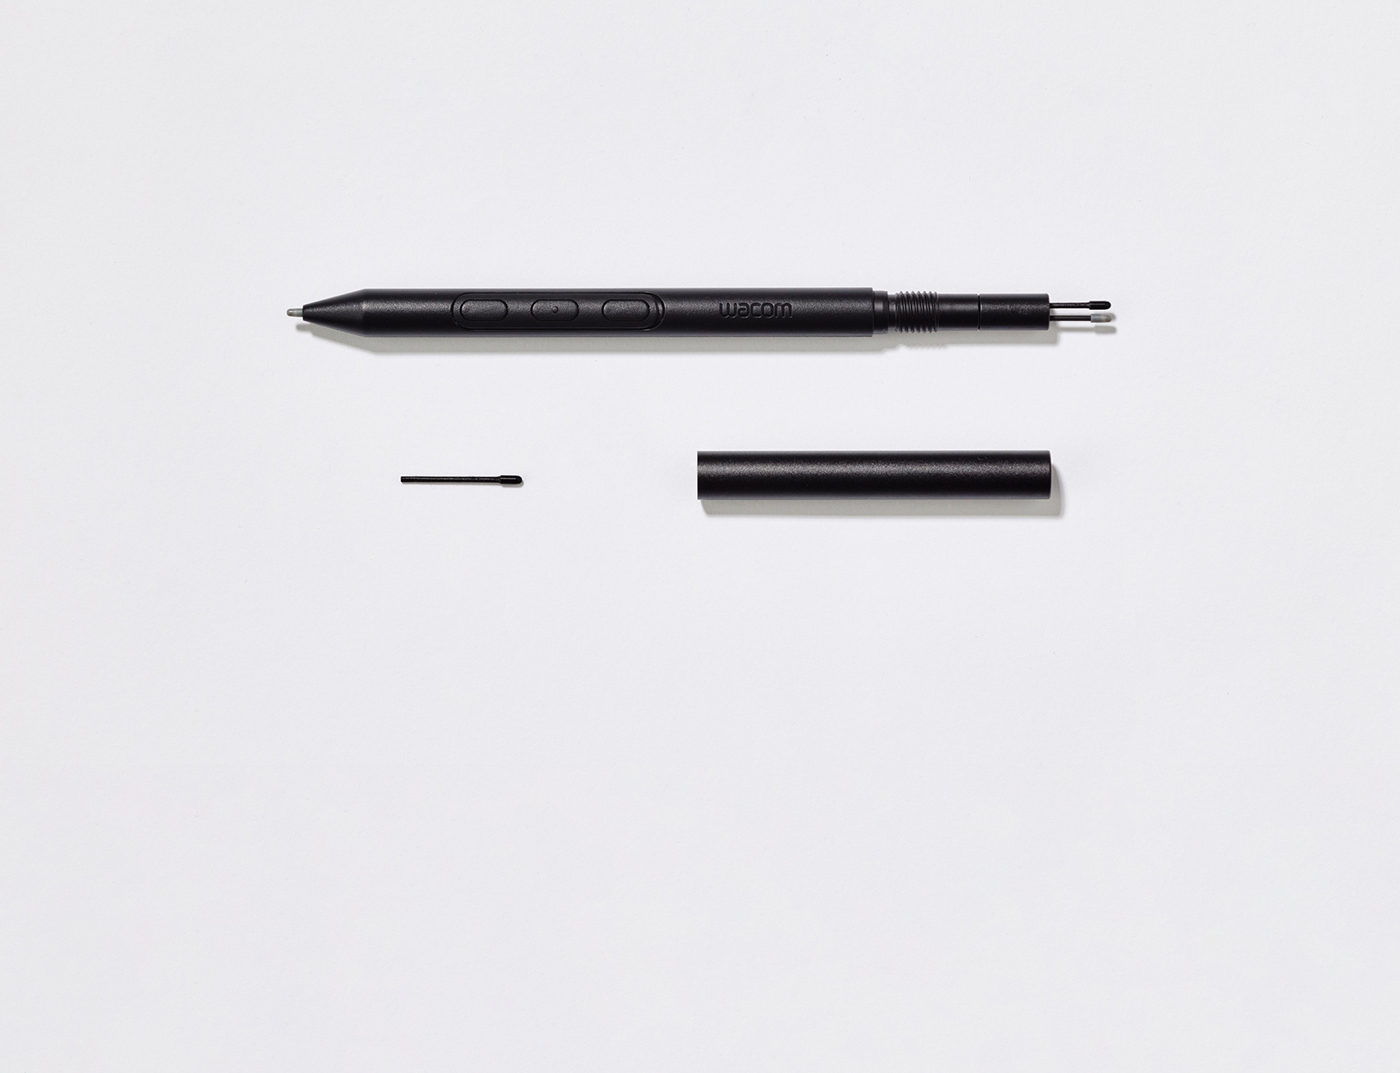 A Wacom pen stylus showcasing the built in Nib storage